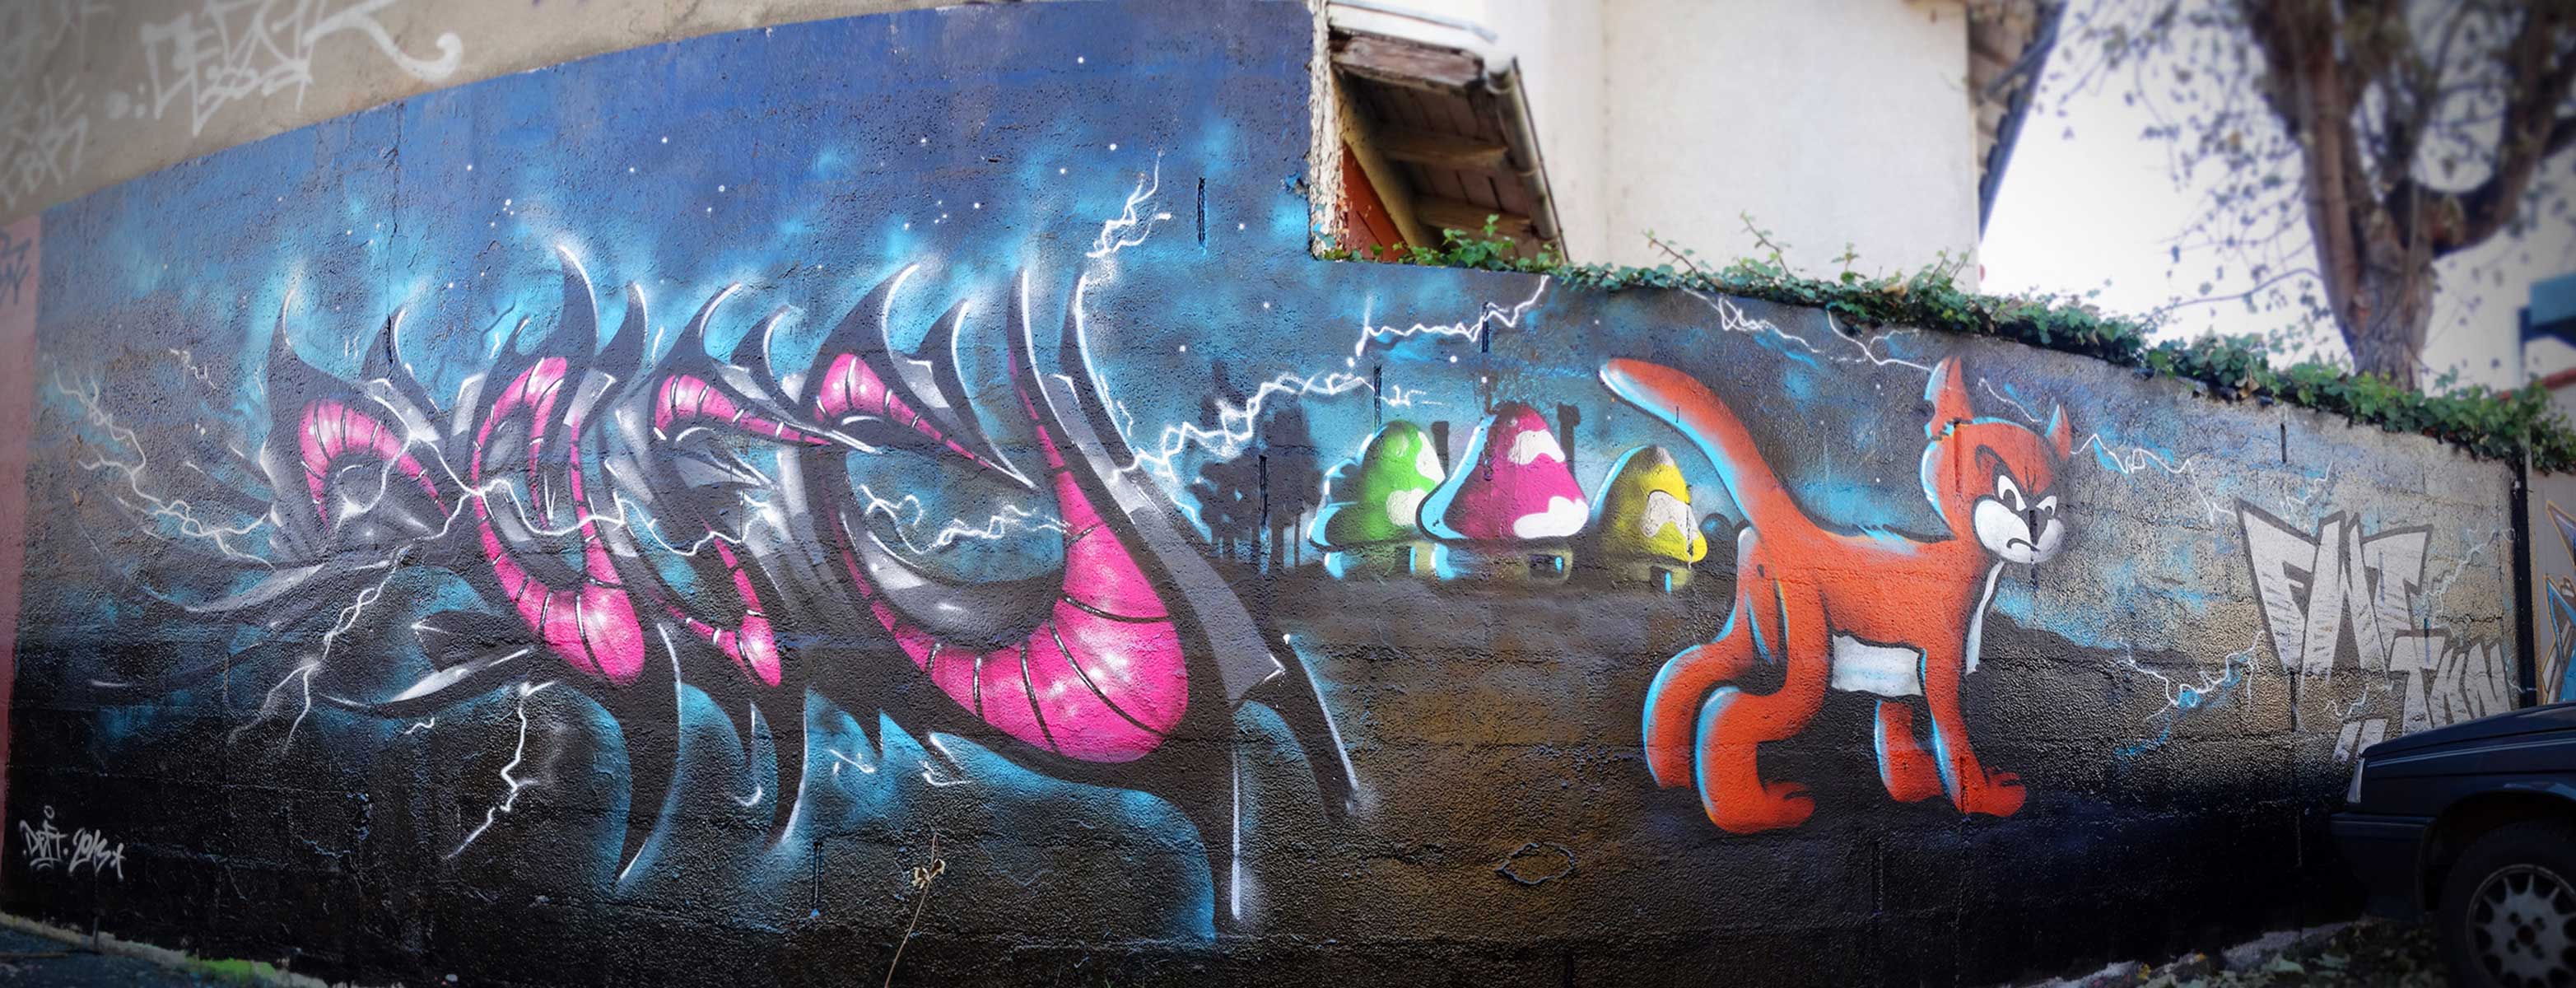 schtroumpf graffiti